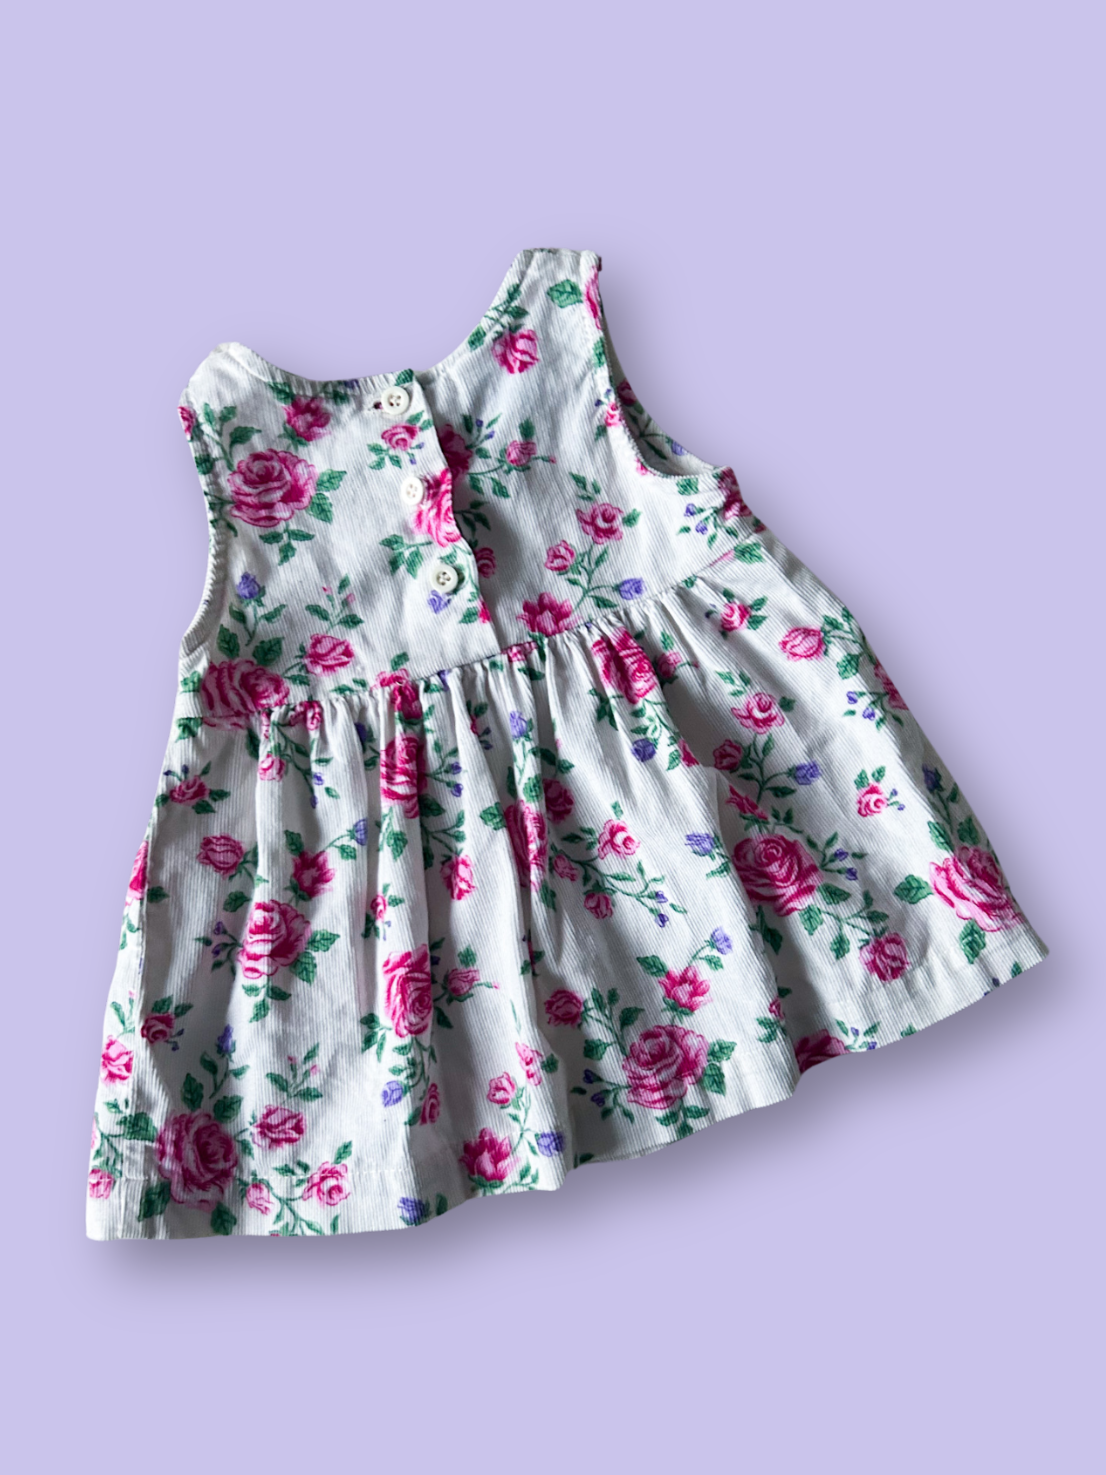 Vintage Baby B'Gosh Floral Dress, approx 12 months